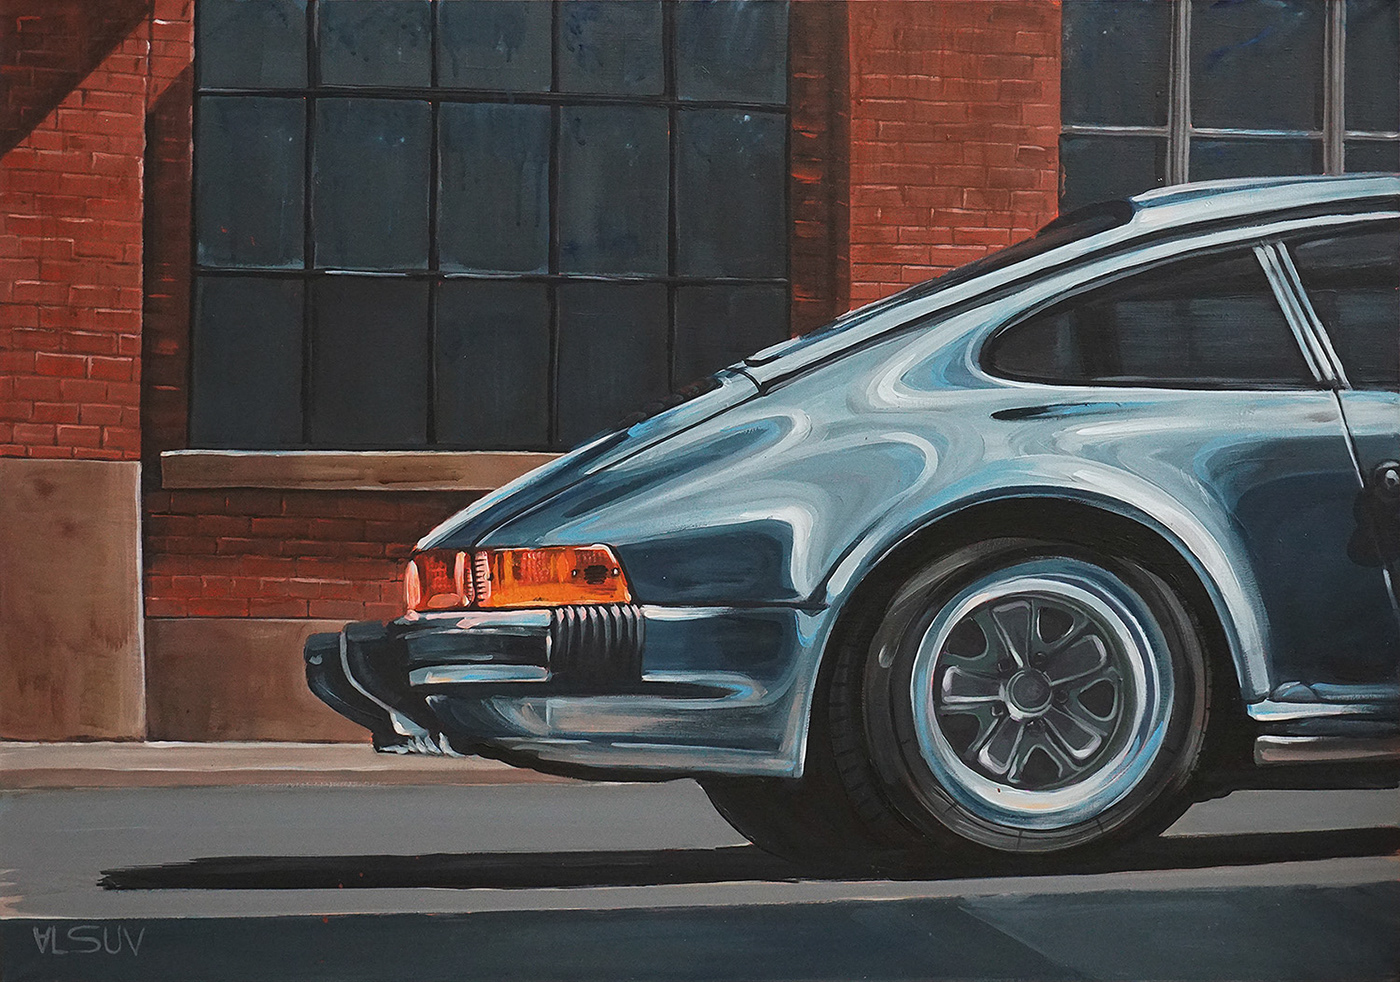 acryllic art automotive   canvas painting   Porsche 911 Vehicle